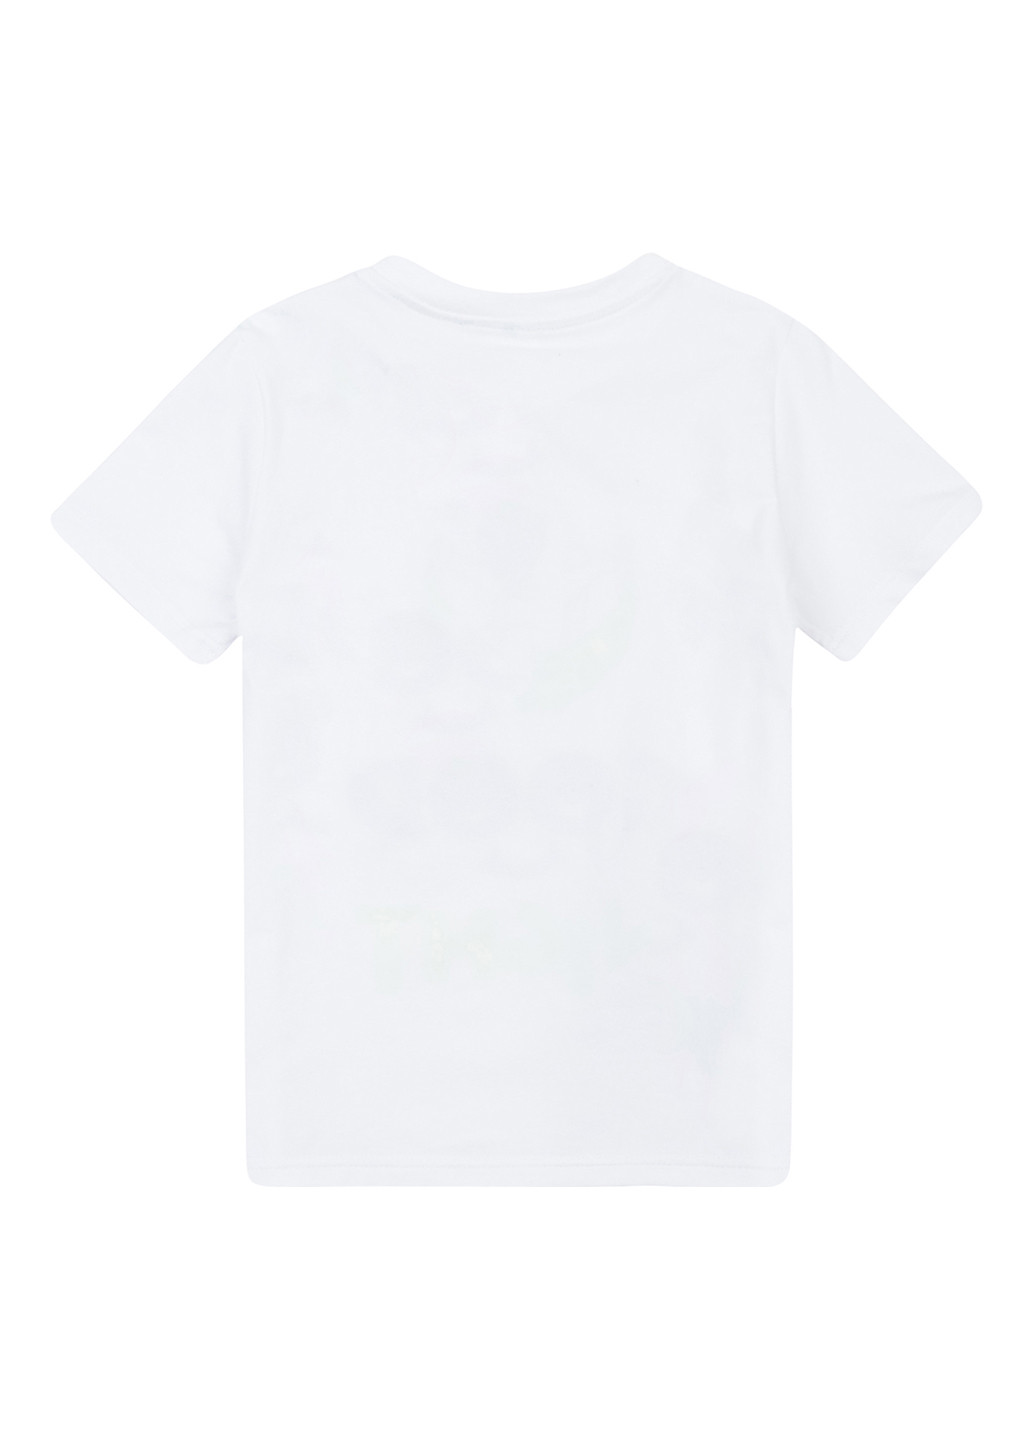 Черно-белая всесезон пижама (футболка, брюки) футболка + брюки Garnamama